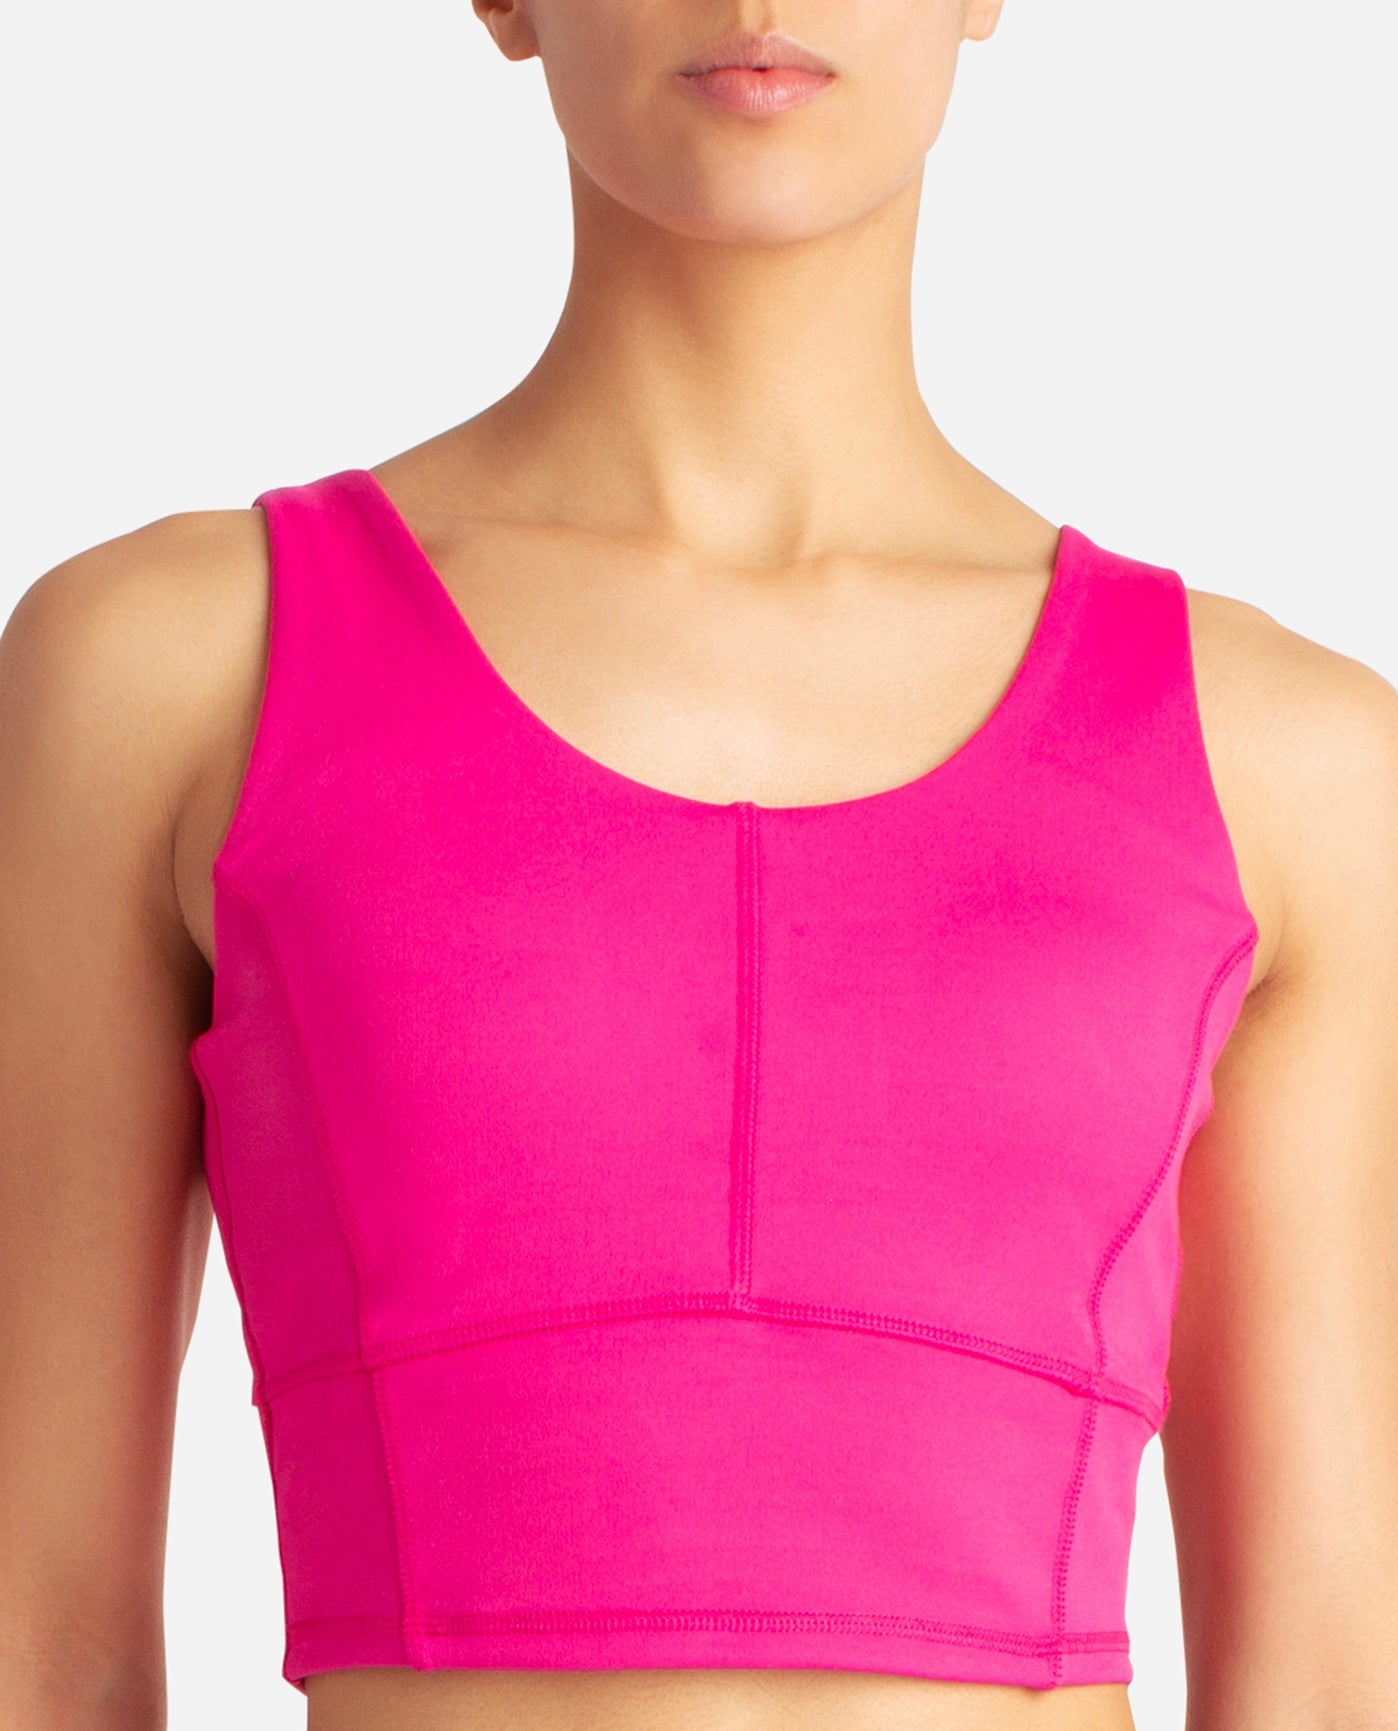 Qinsen Women's Longline Crop Built in Bra Top Pink Size XS One